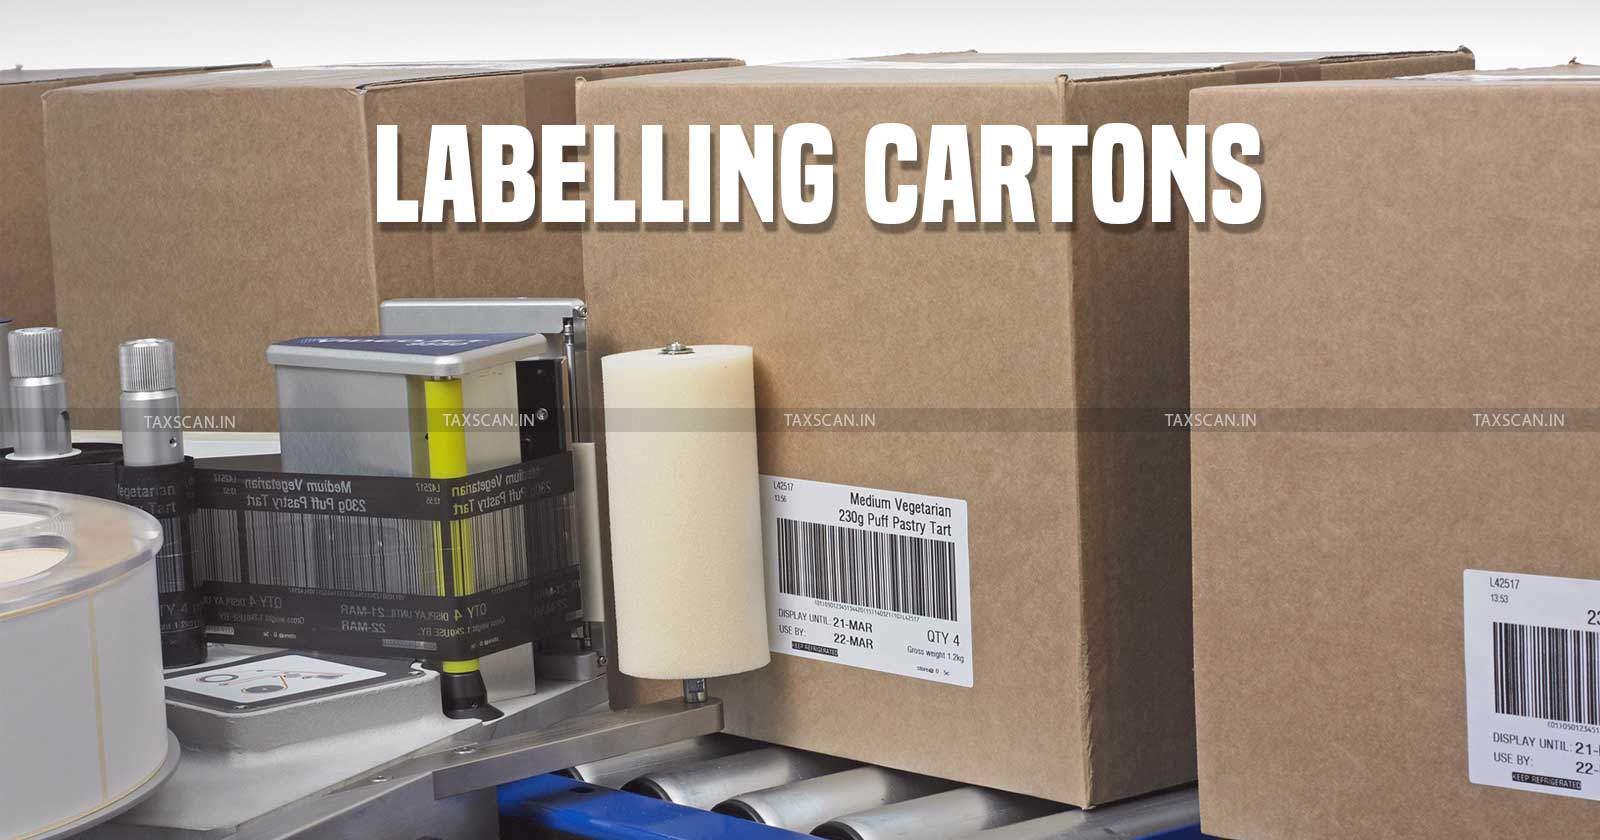 Supreme Court - Labelling cartons - Cenvat Credit - Re labelling cartons - taxscan